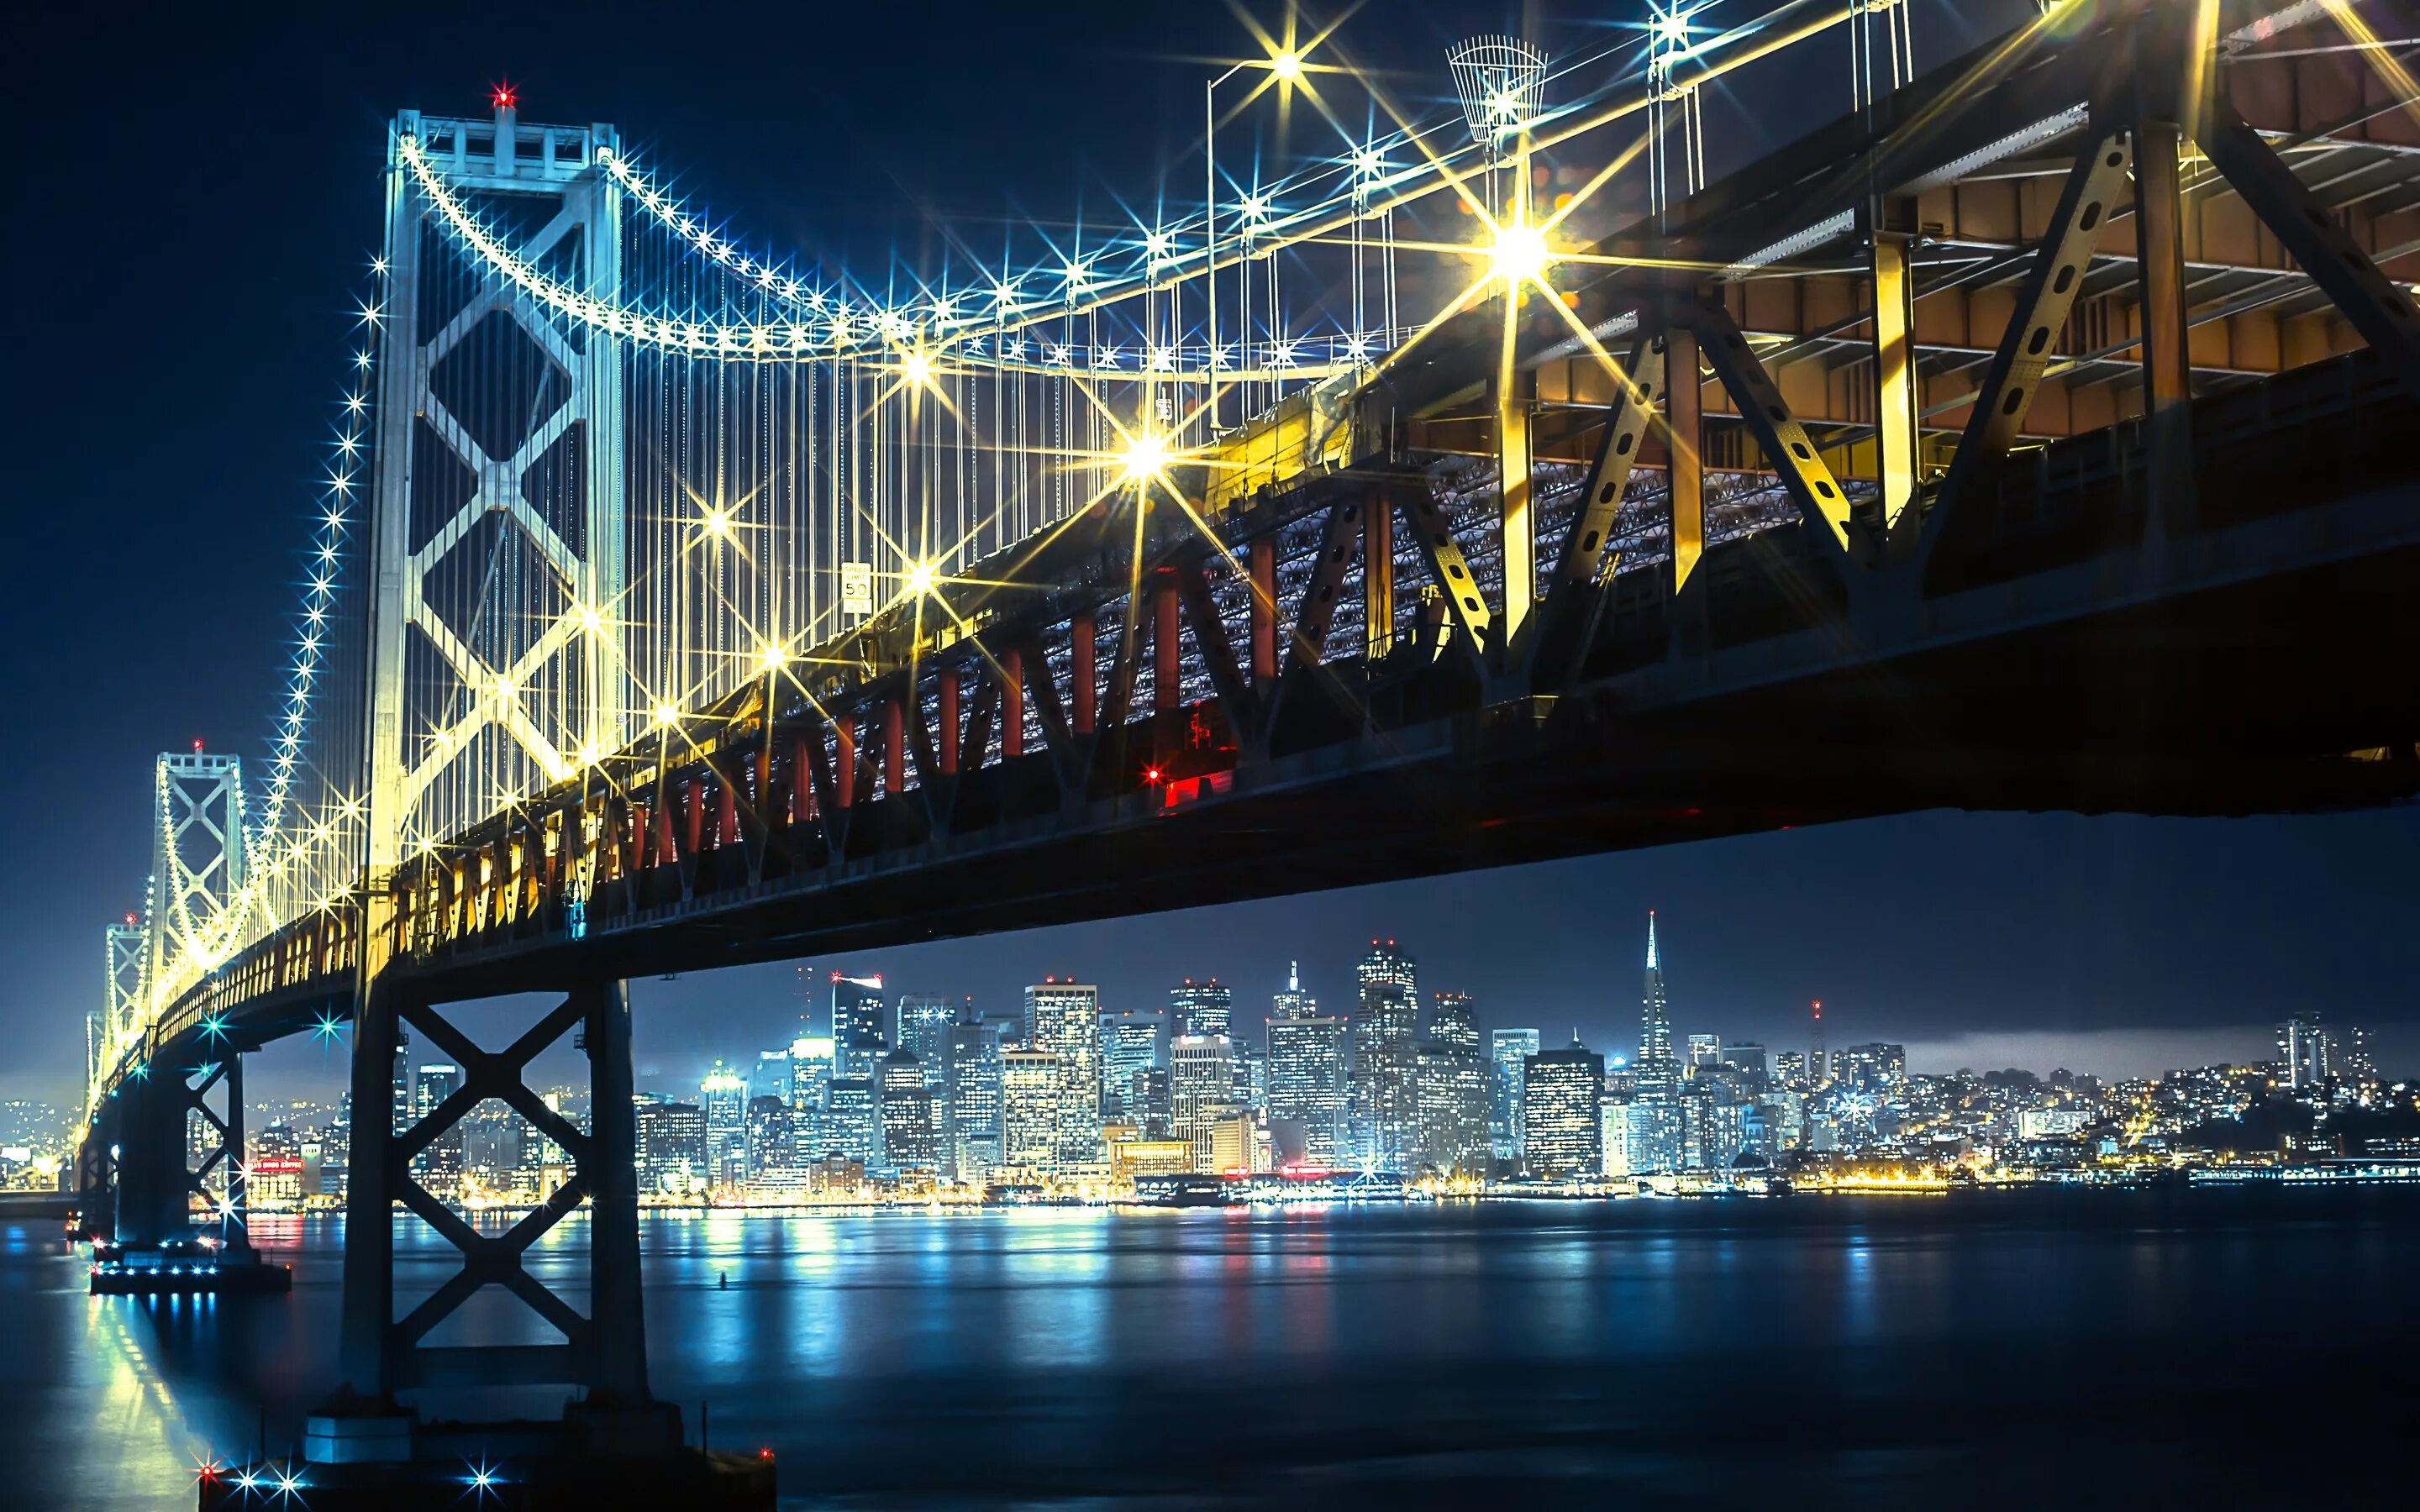 Бруклинский мост Сан Франциско. Бруклинский мост Нью-Йорк. Мост Сан Франциско Окленд ночной. Фотообои Сан Франциско ночной мост.